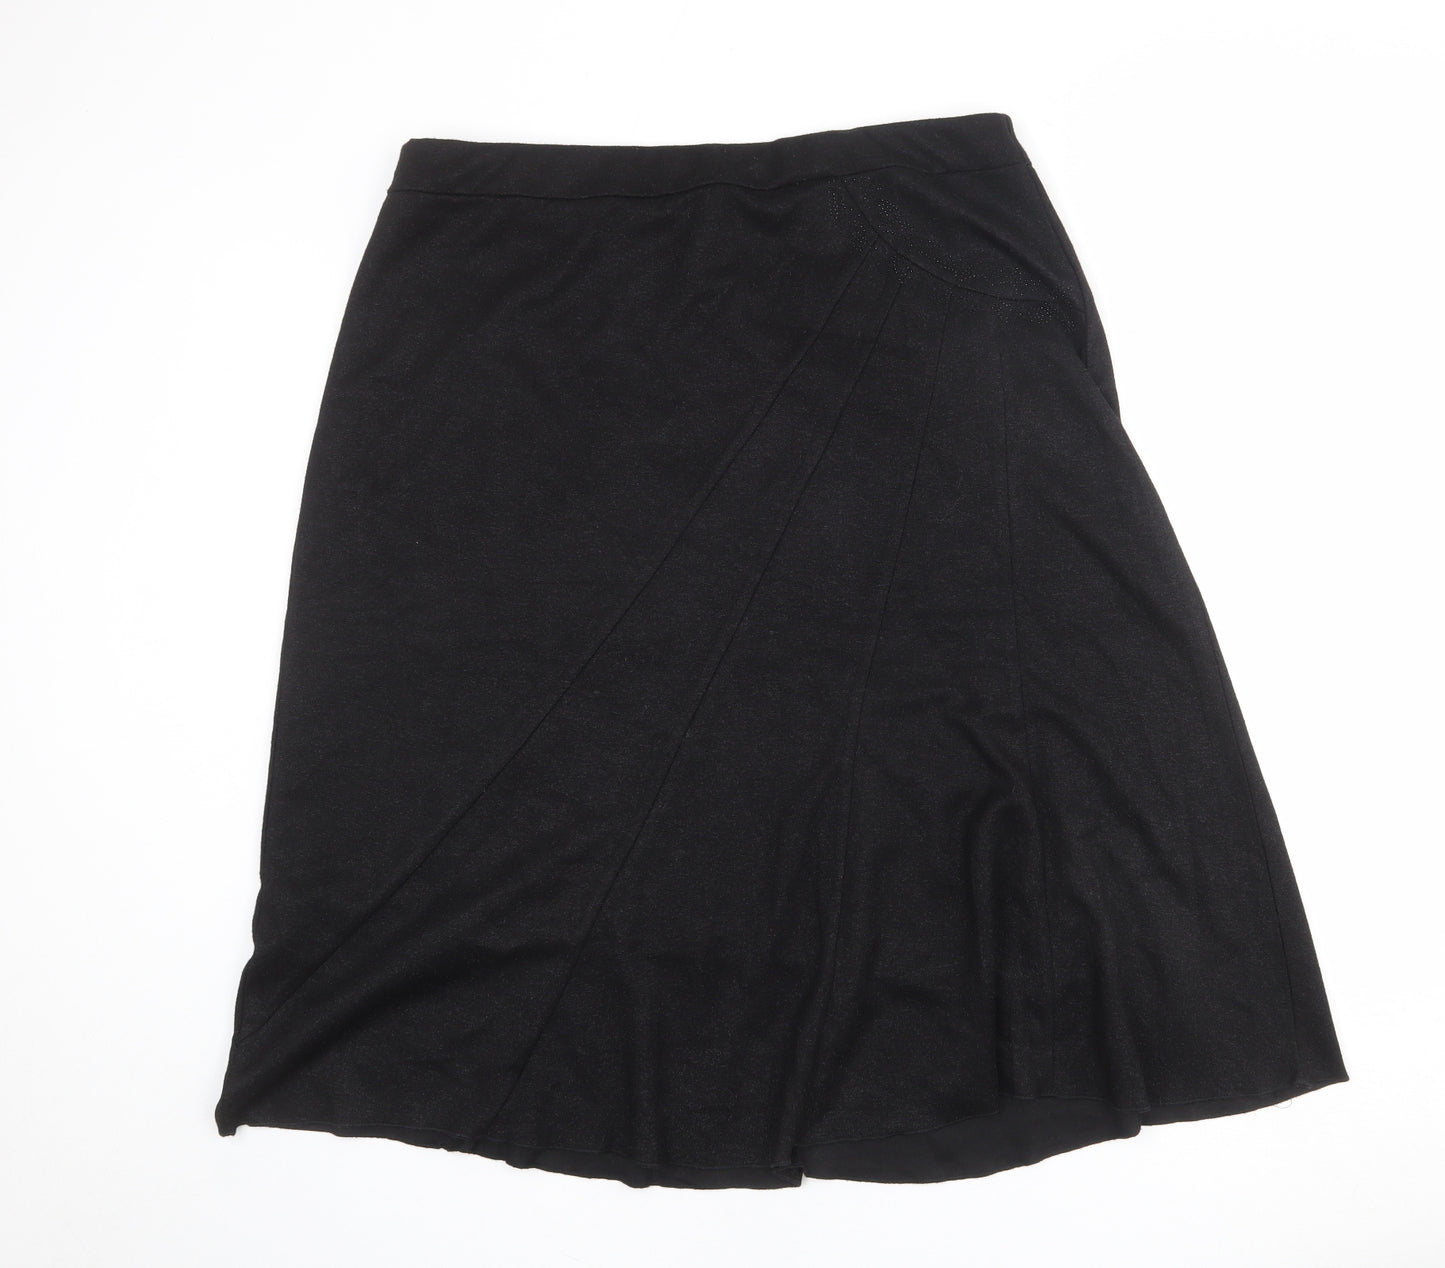 Just Elegance Womens Black Viscose Swing Skirt Size 18